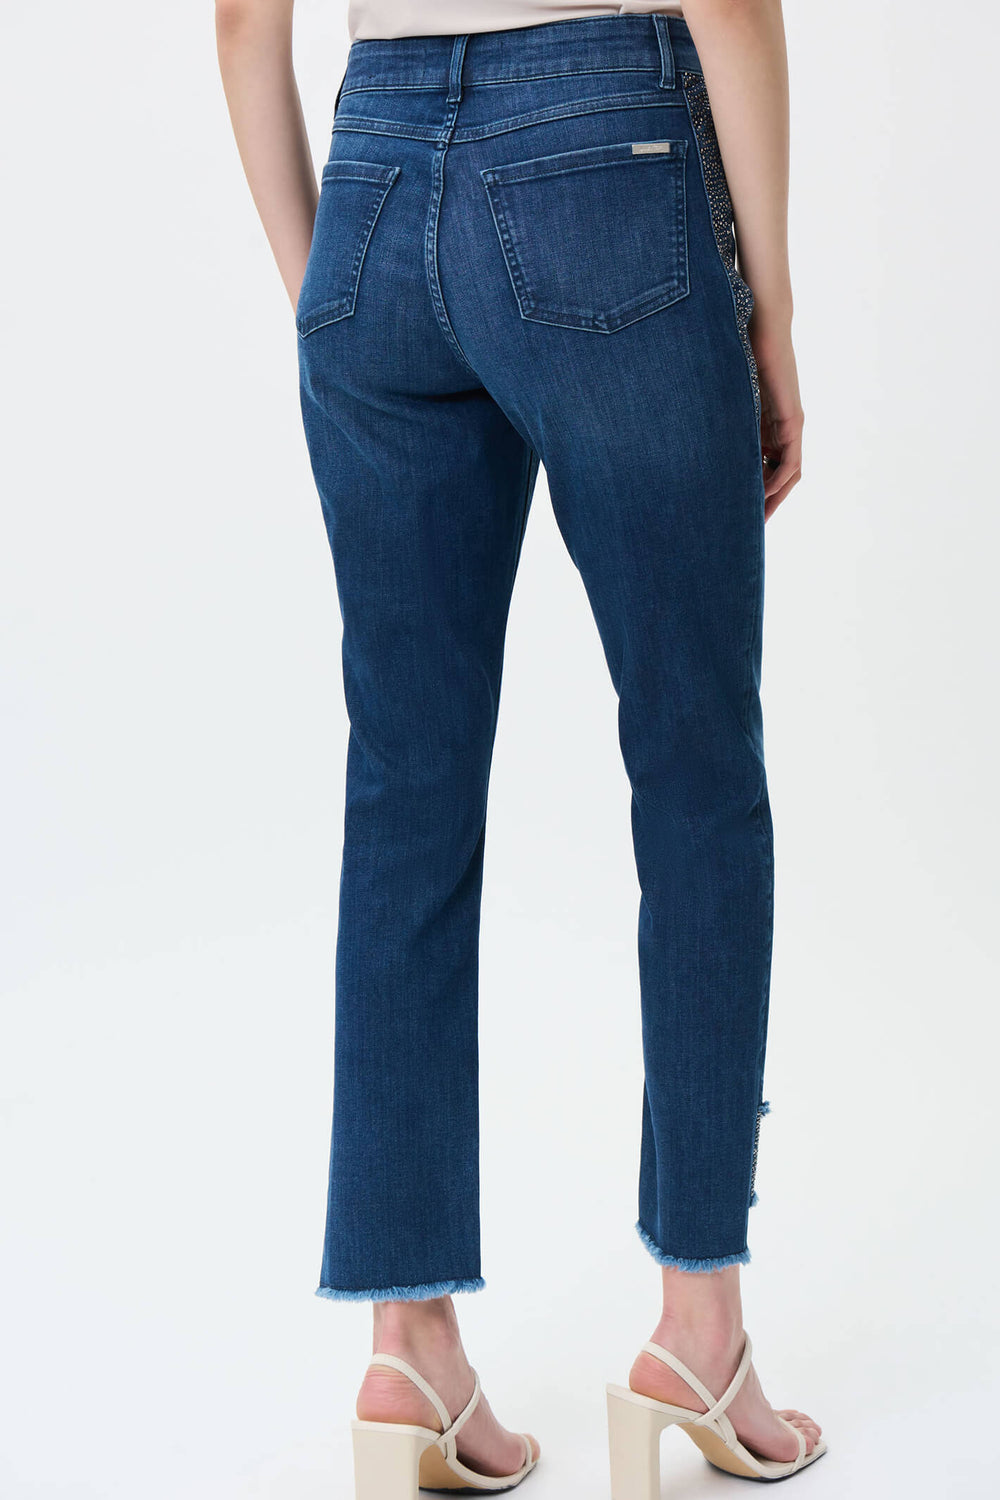 Joseph Ribkoff 221944S Denim Blue Embellished Jeans - Experience Boutique